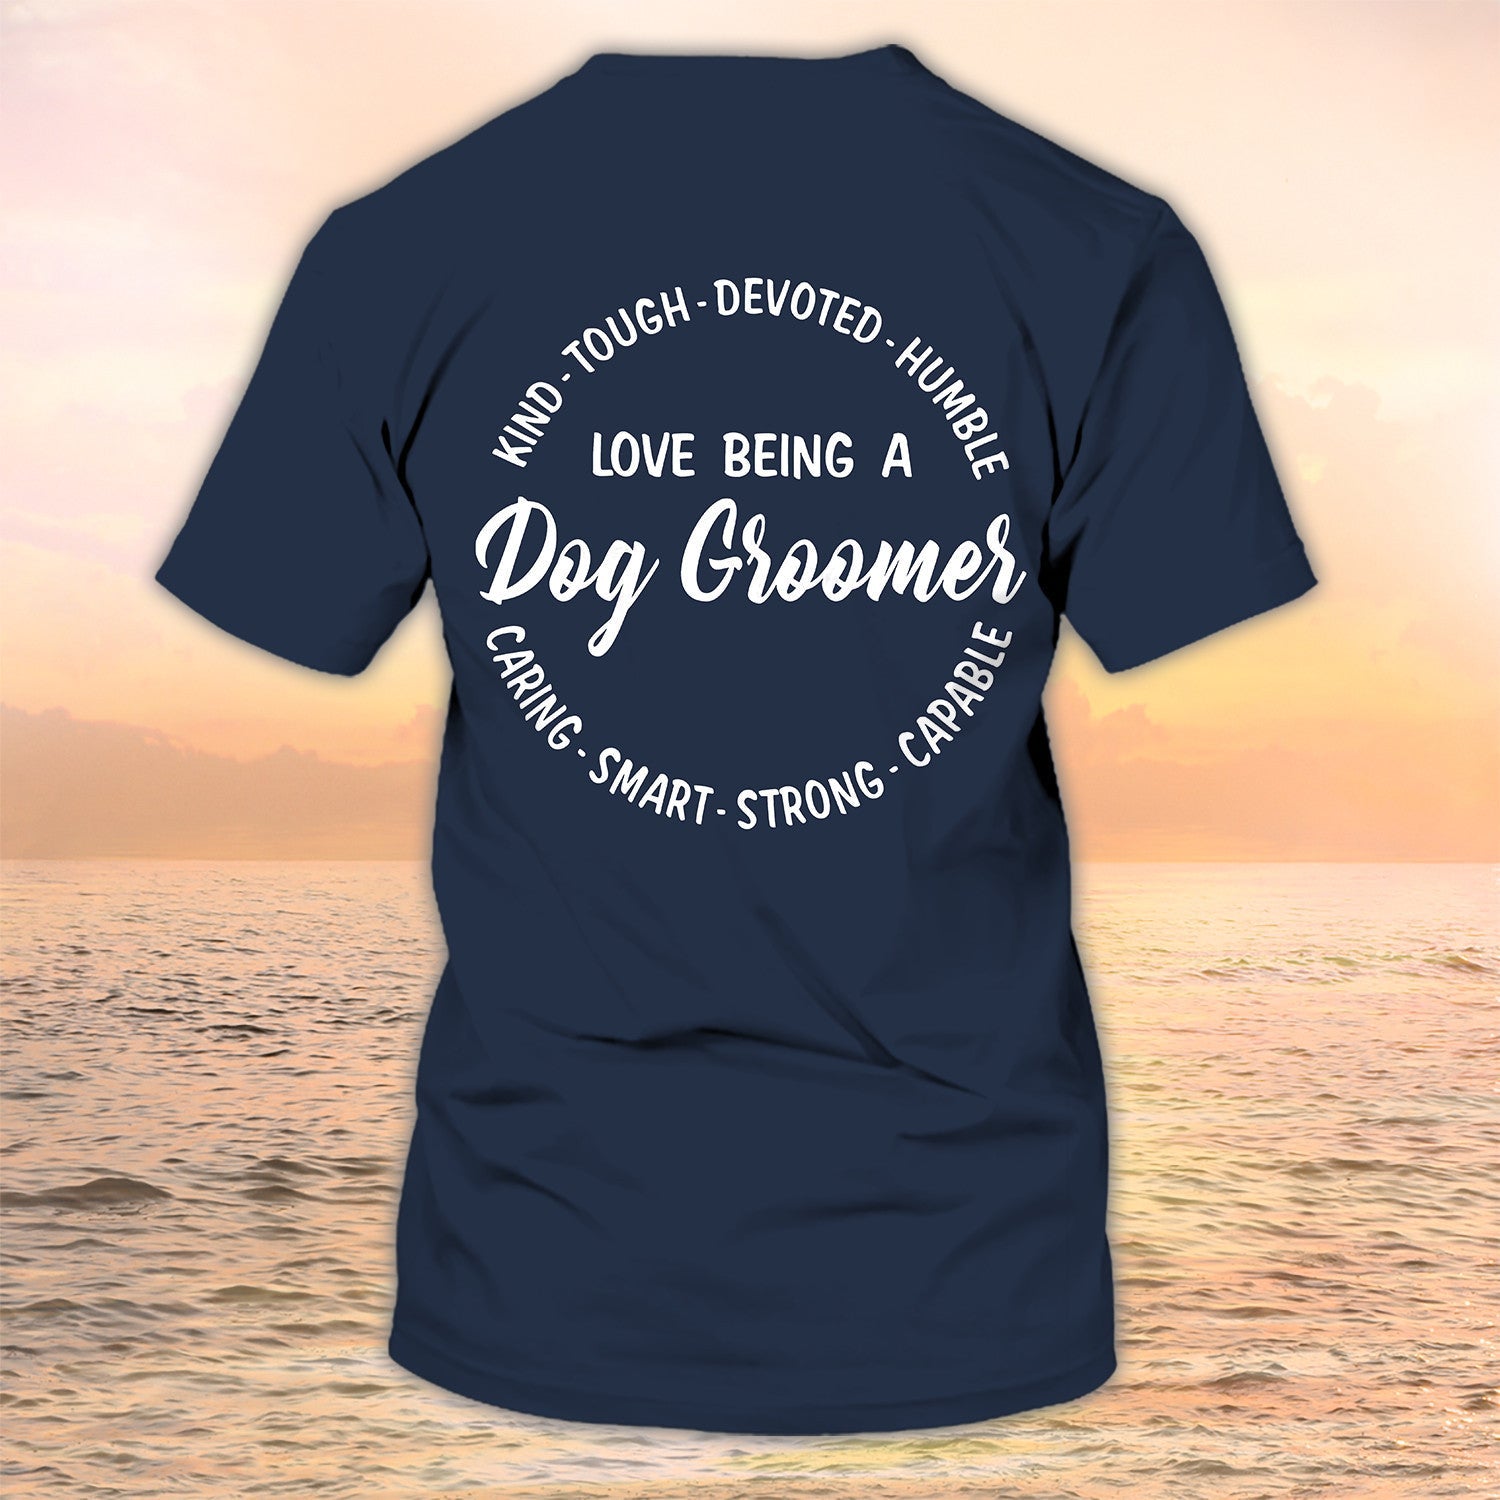 Dog Groomer Shirts Grooming Custom Shirts Pet Salon Uniform Love Being A Dog Groomer